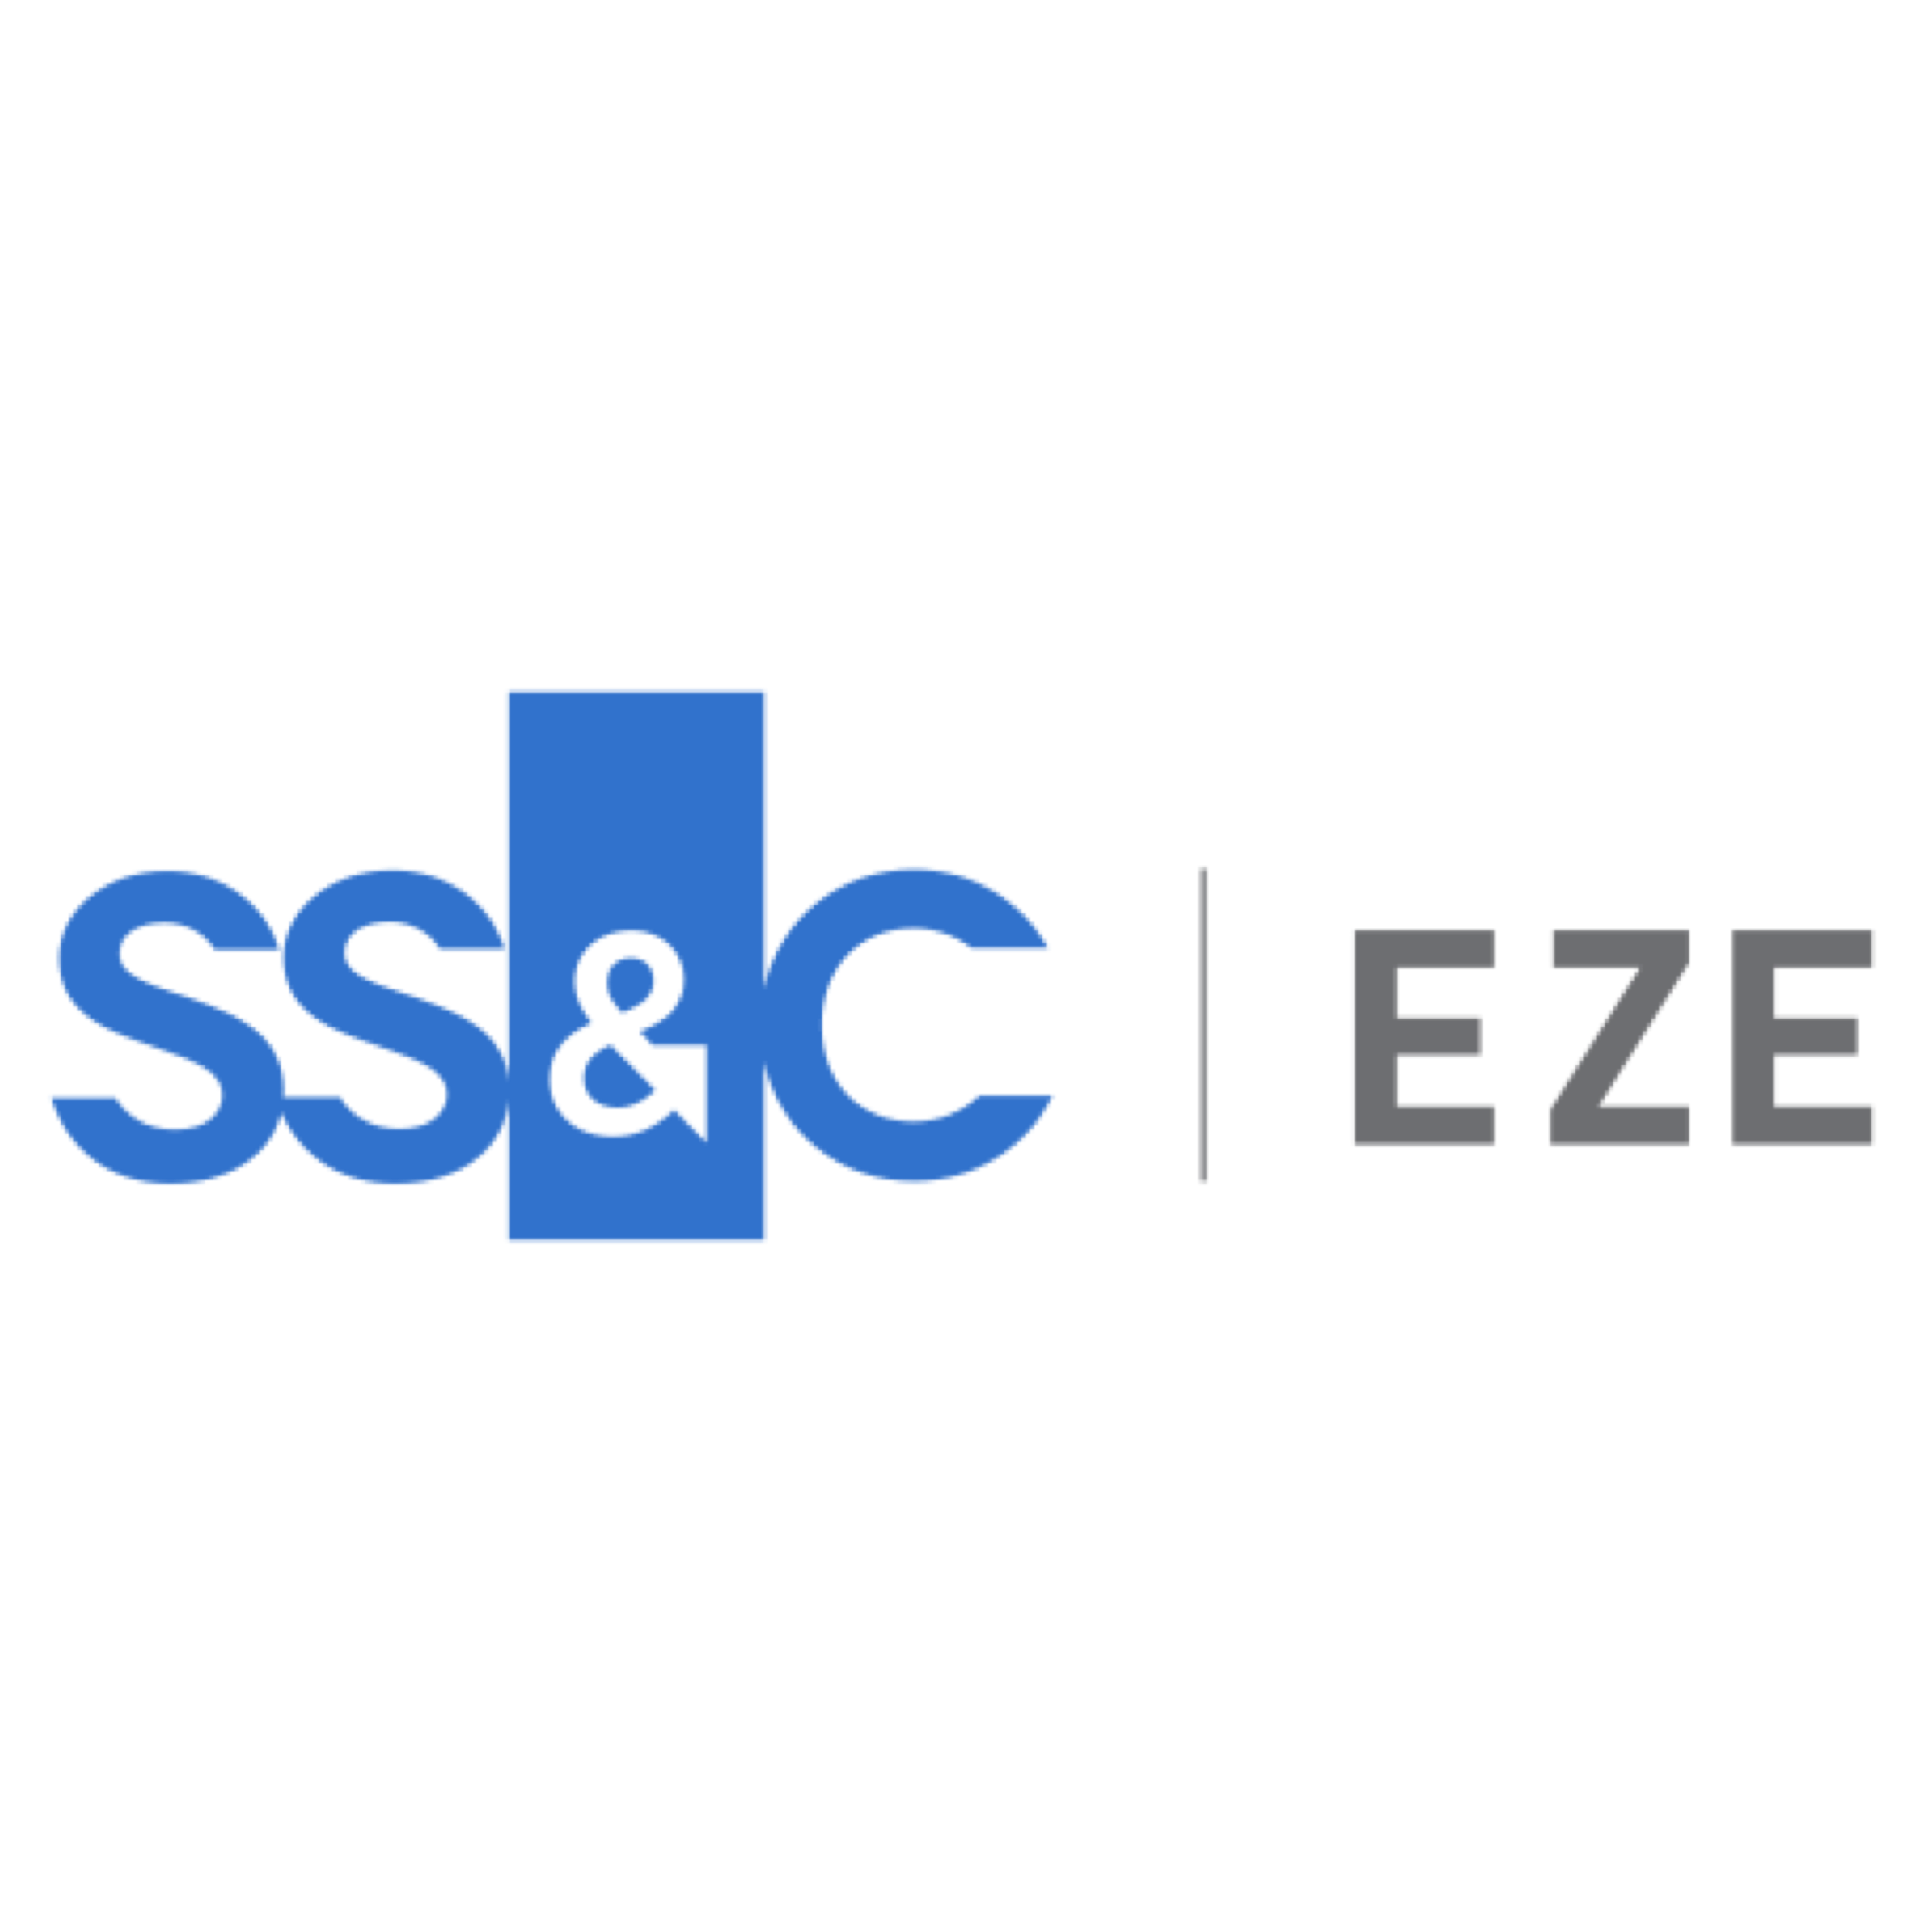 SS&C Eze